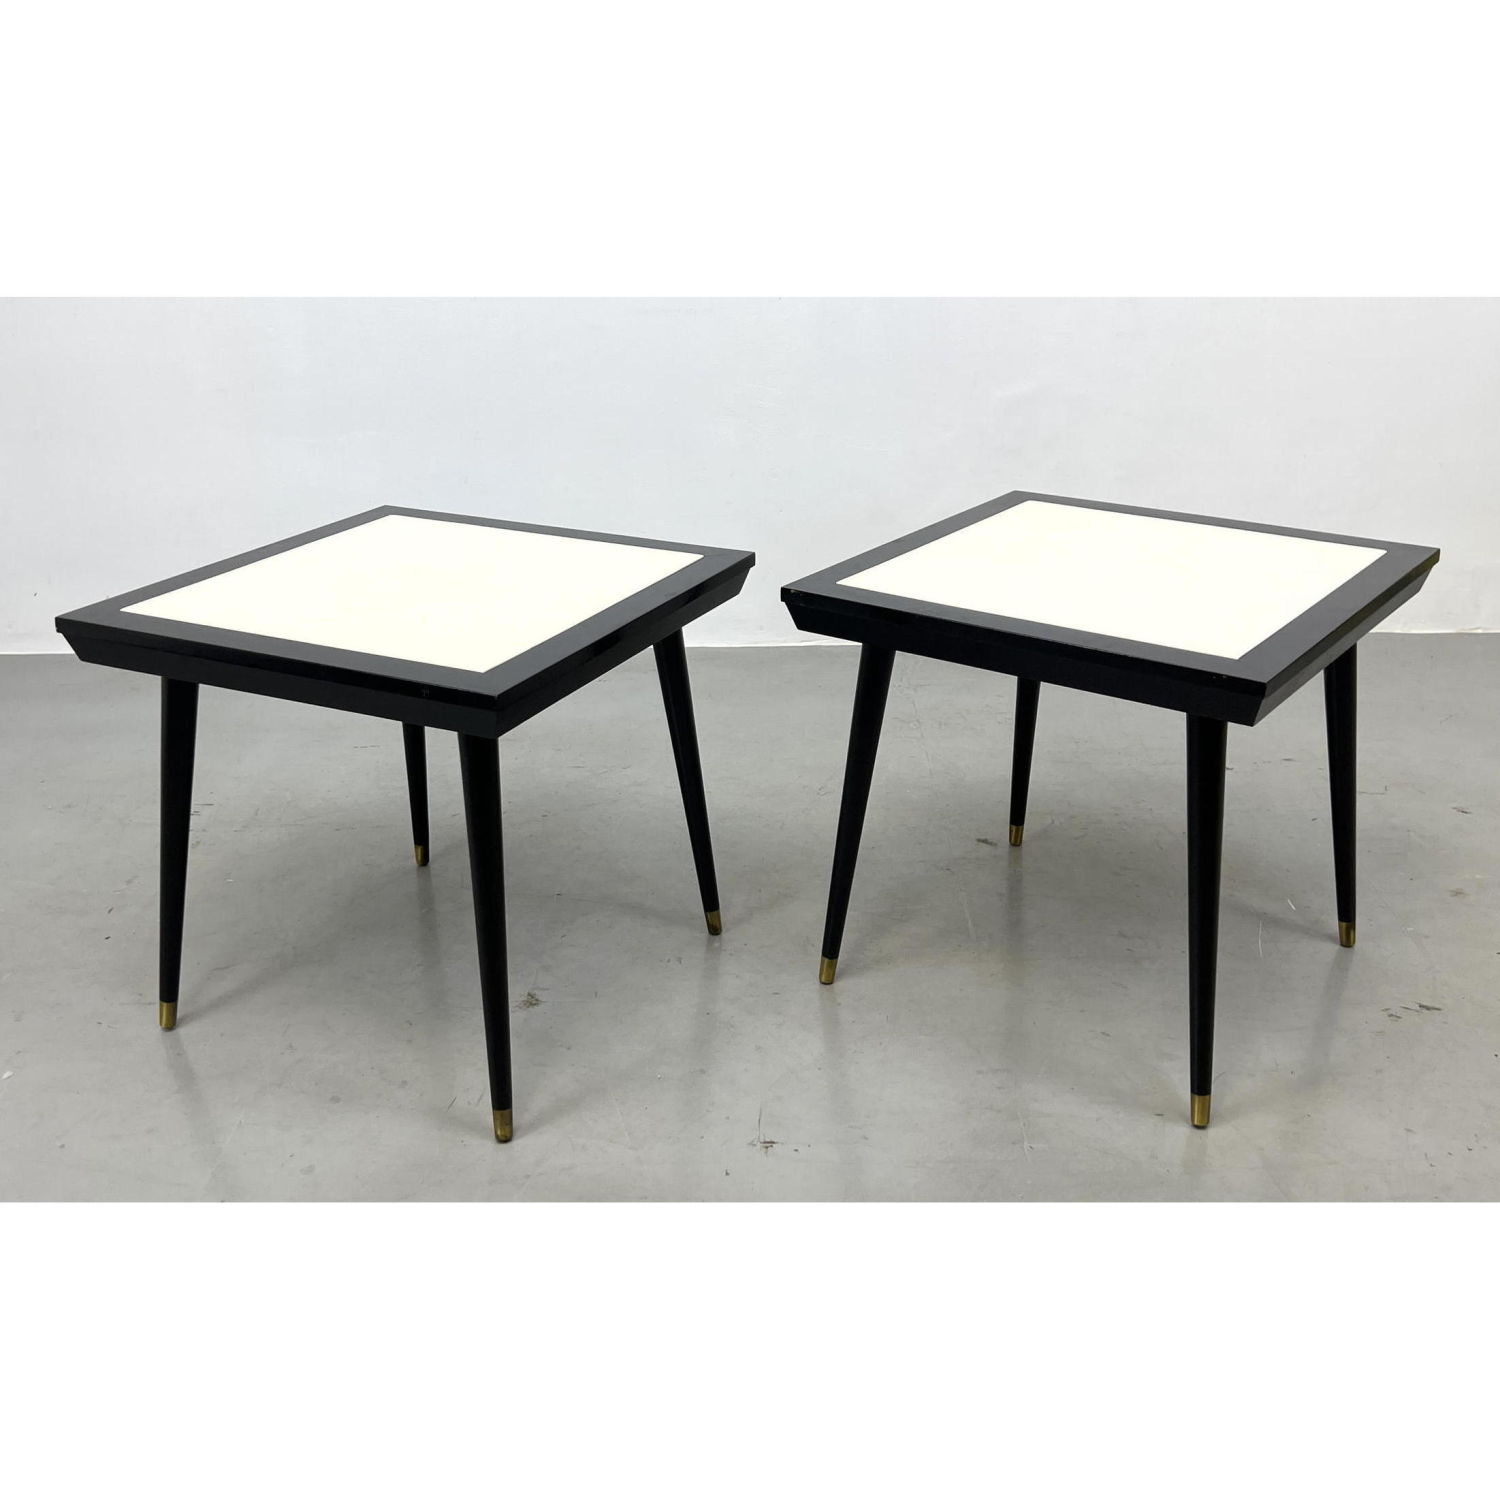 Pr Ebonized Side Tables. White